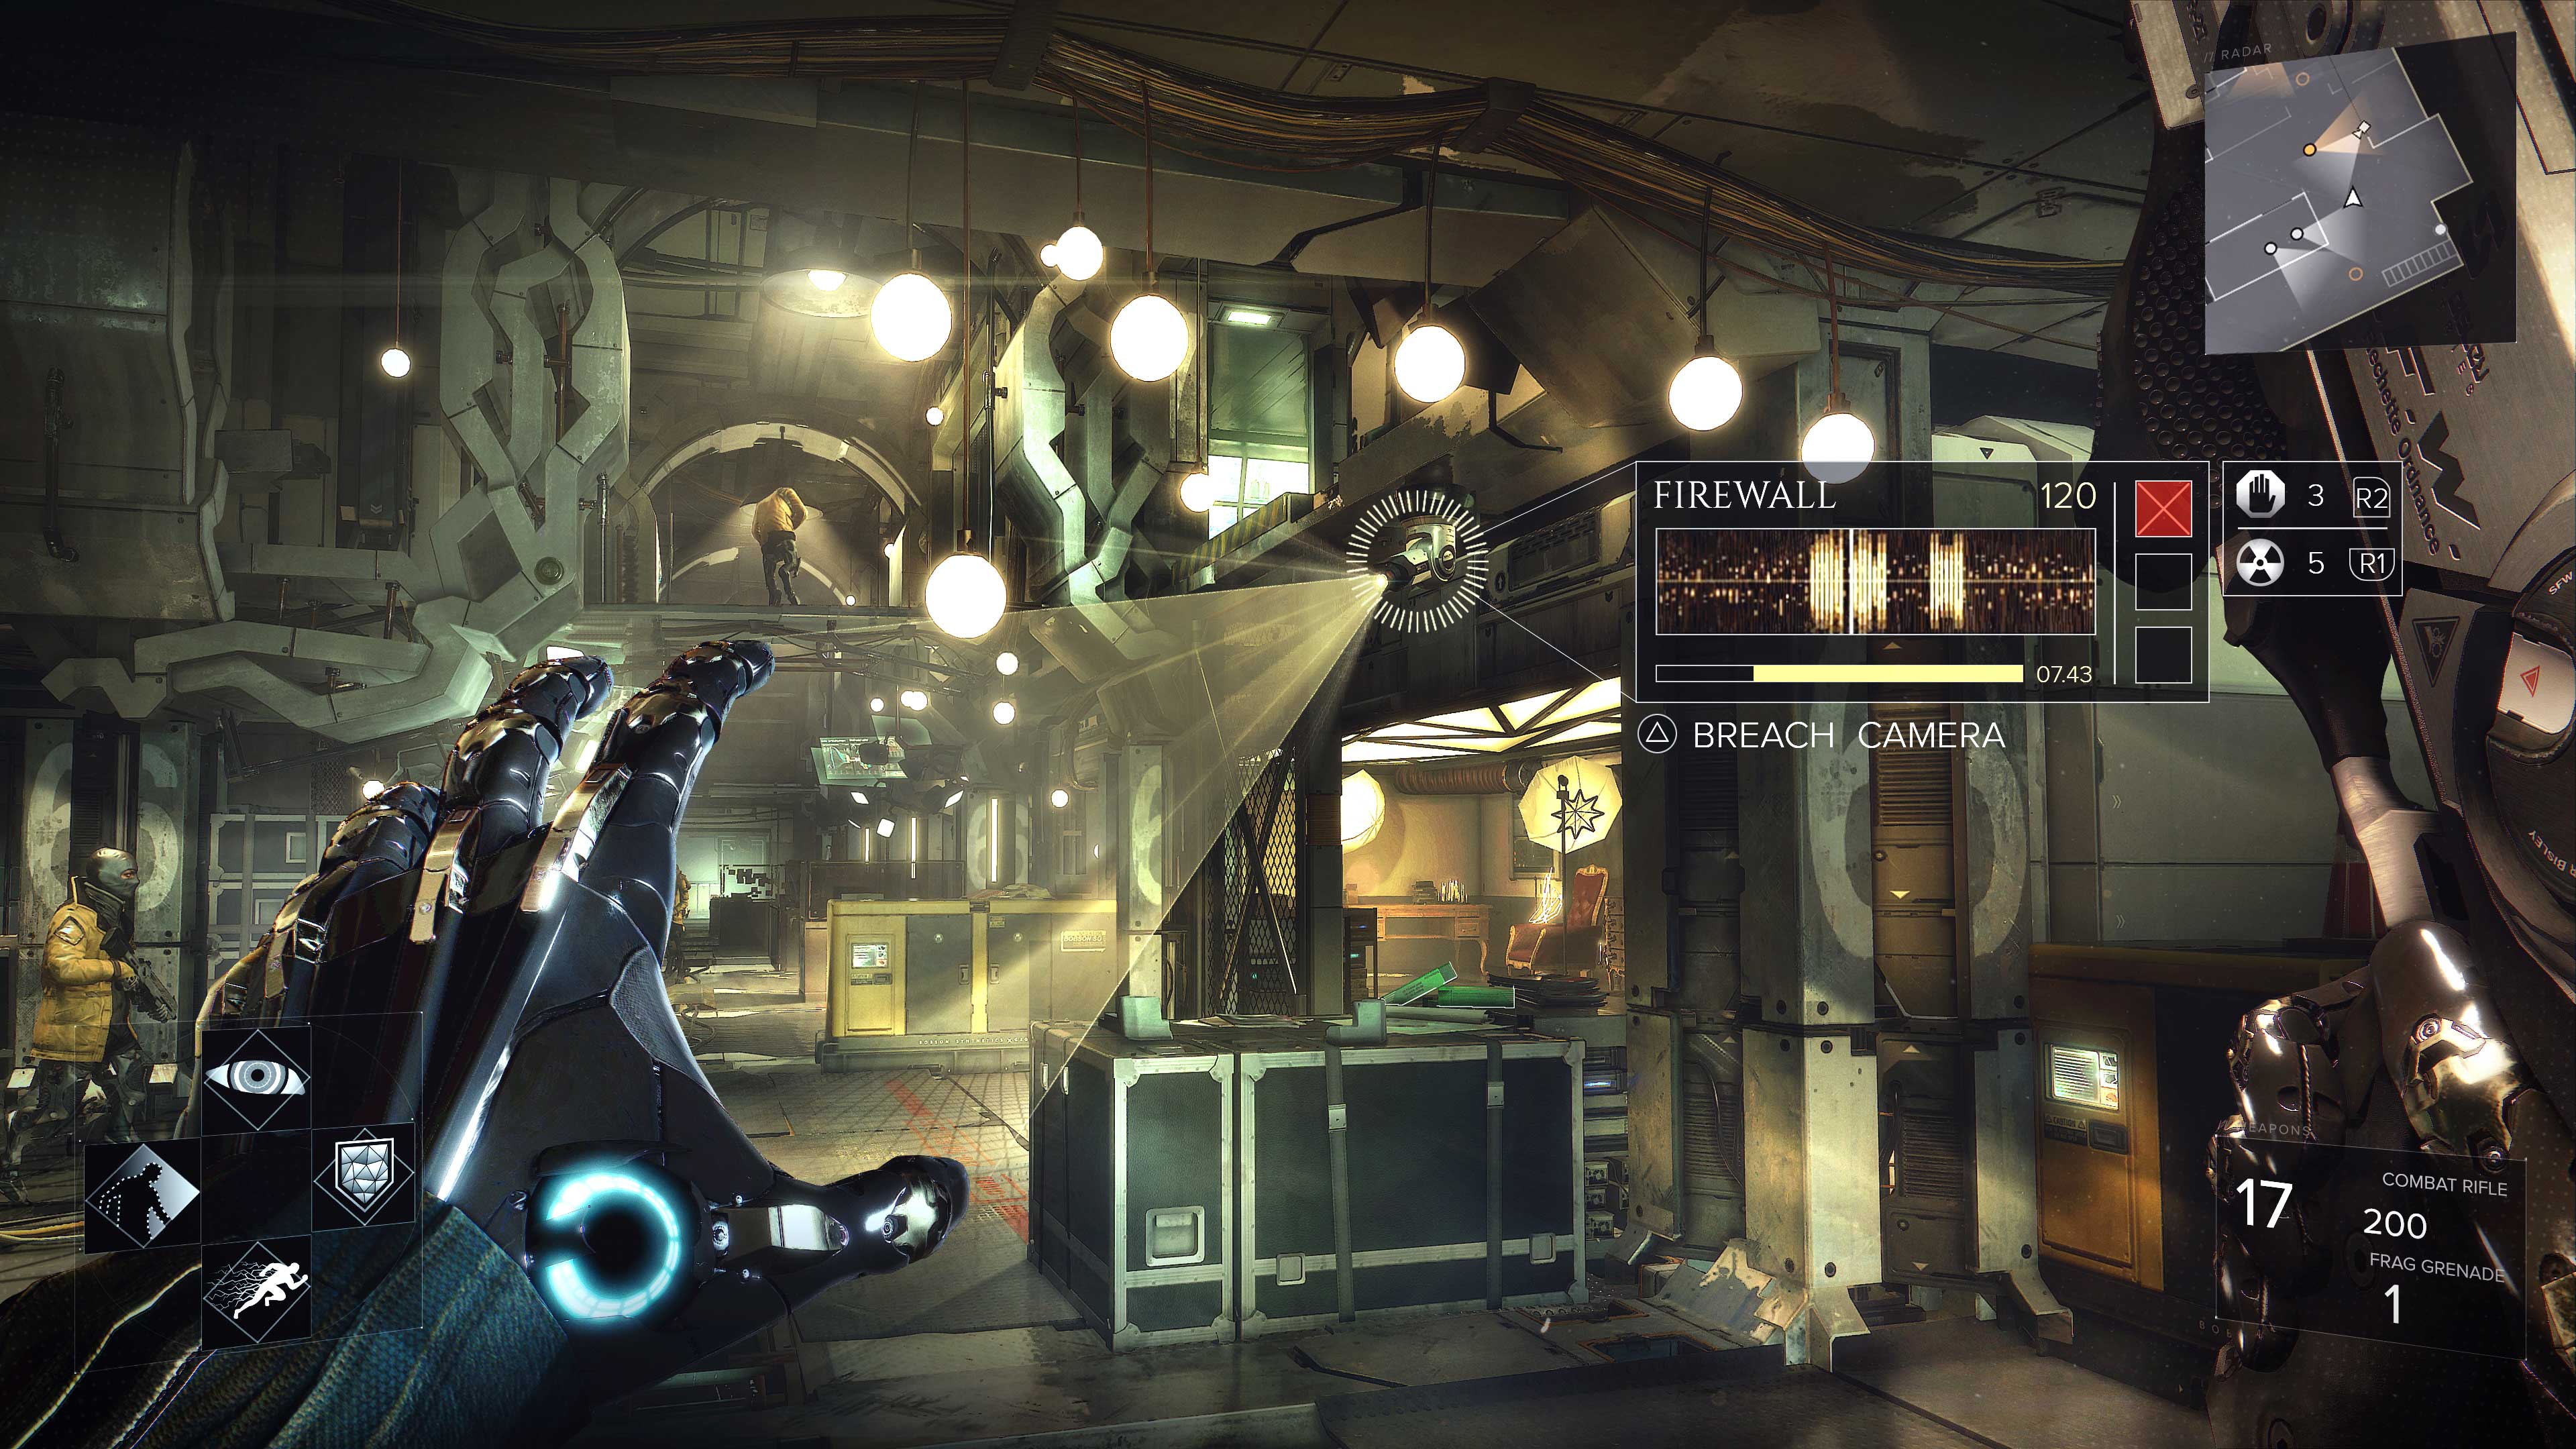 Nice Images Collection: Deus Ex: Mankind Divided Desktop Wallpapers